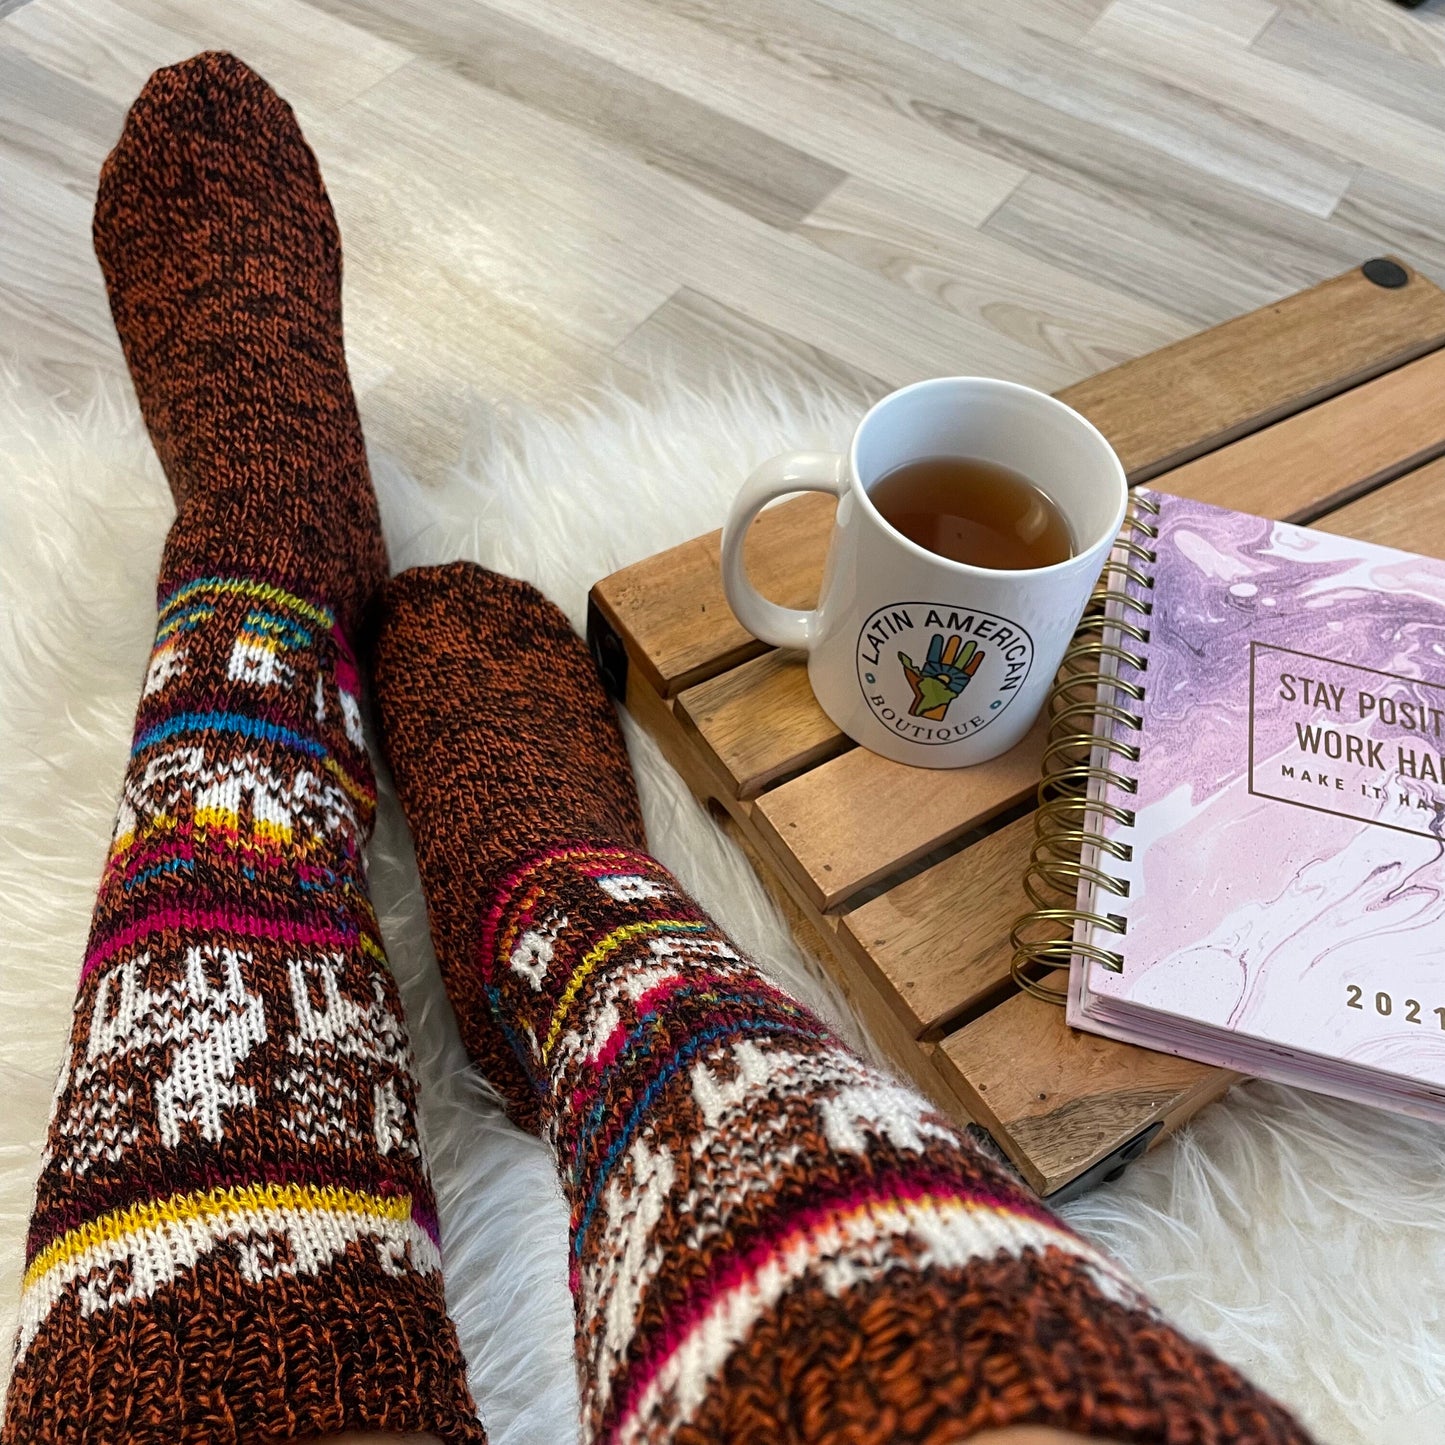 Warm Soft Winter Knitted Wool Socks | Colorful Socks | Size 6-8 US Adult Socks